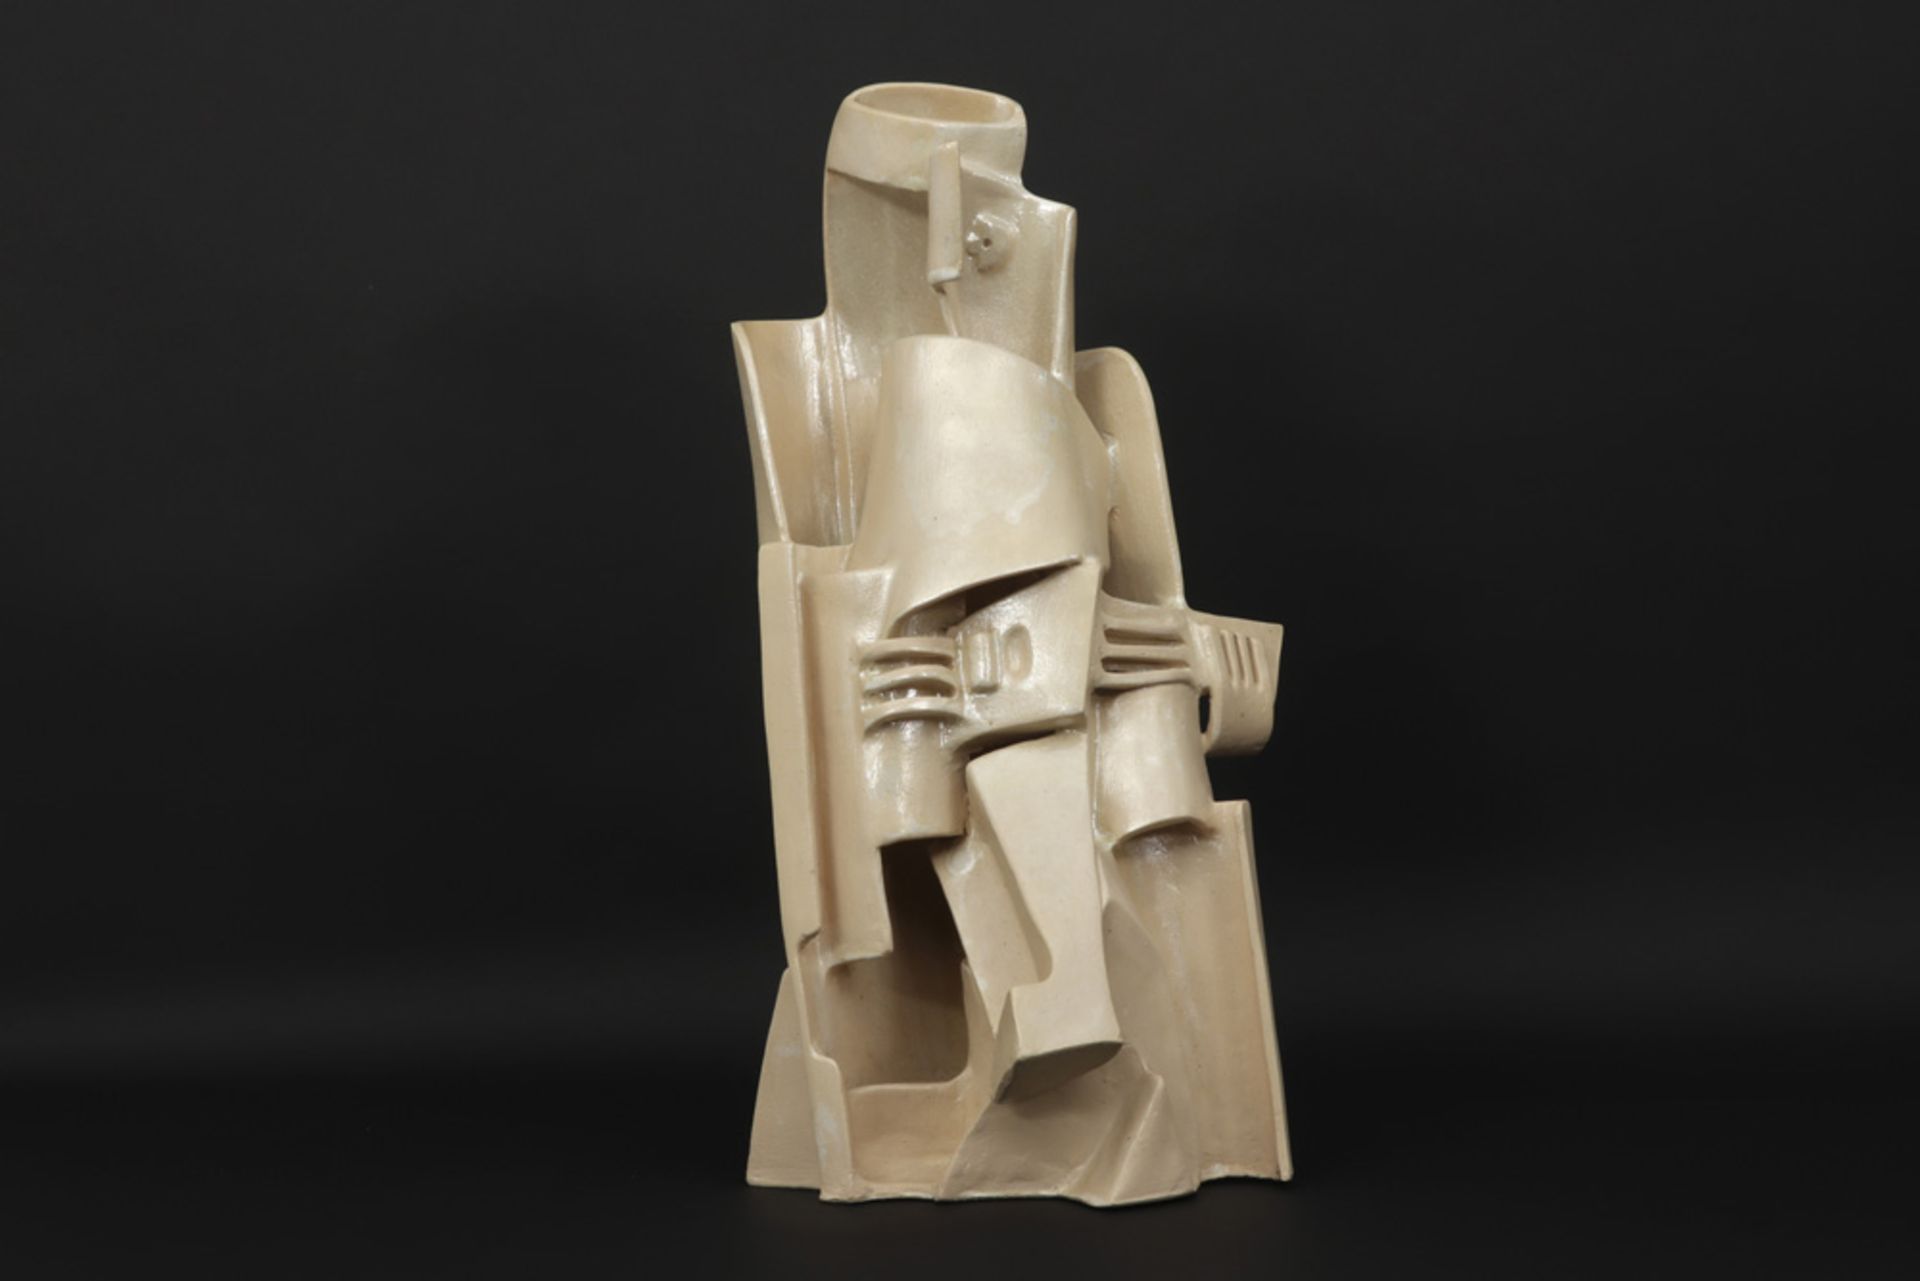 cubist sculpture in ceramic with "MJV" monogram on the bottom || MJV sculptuur in keramiek met een